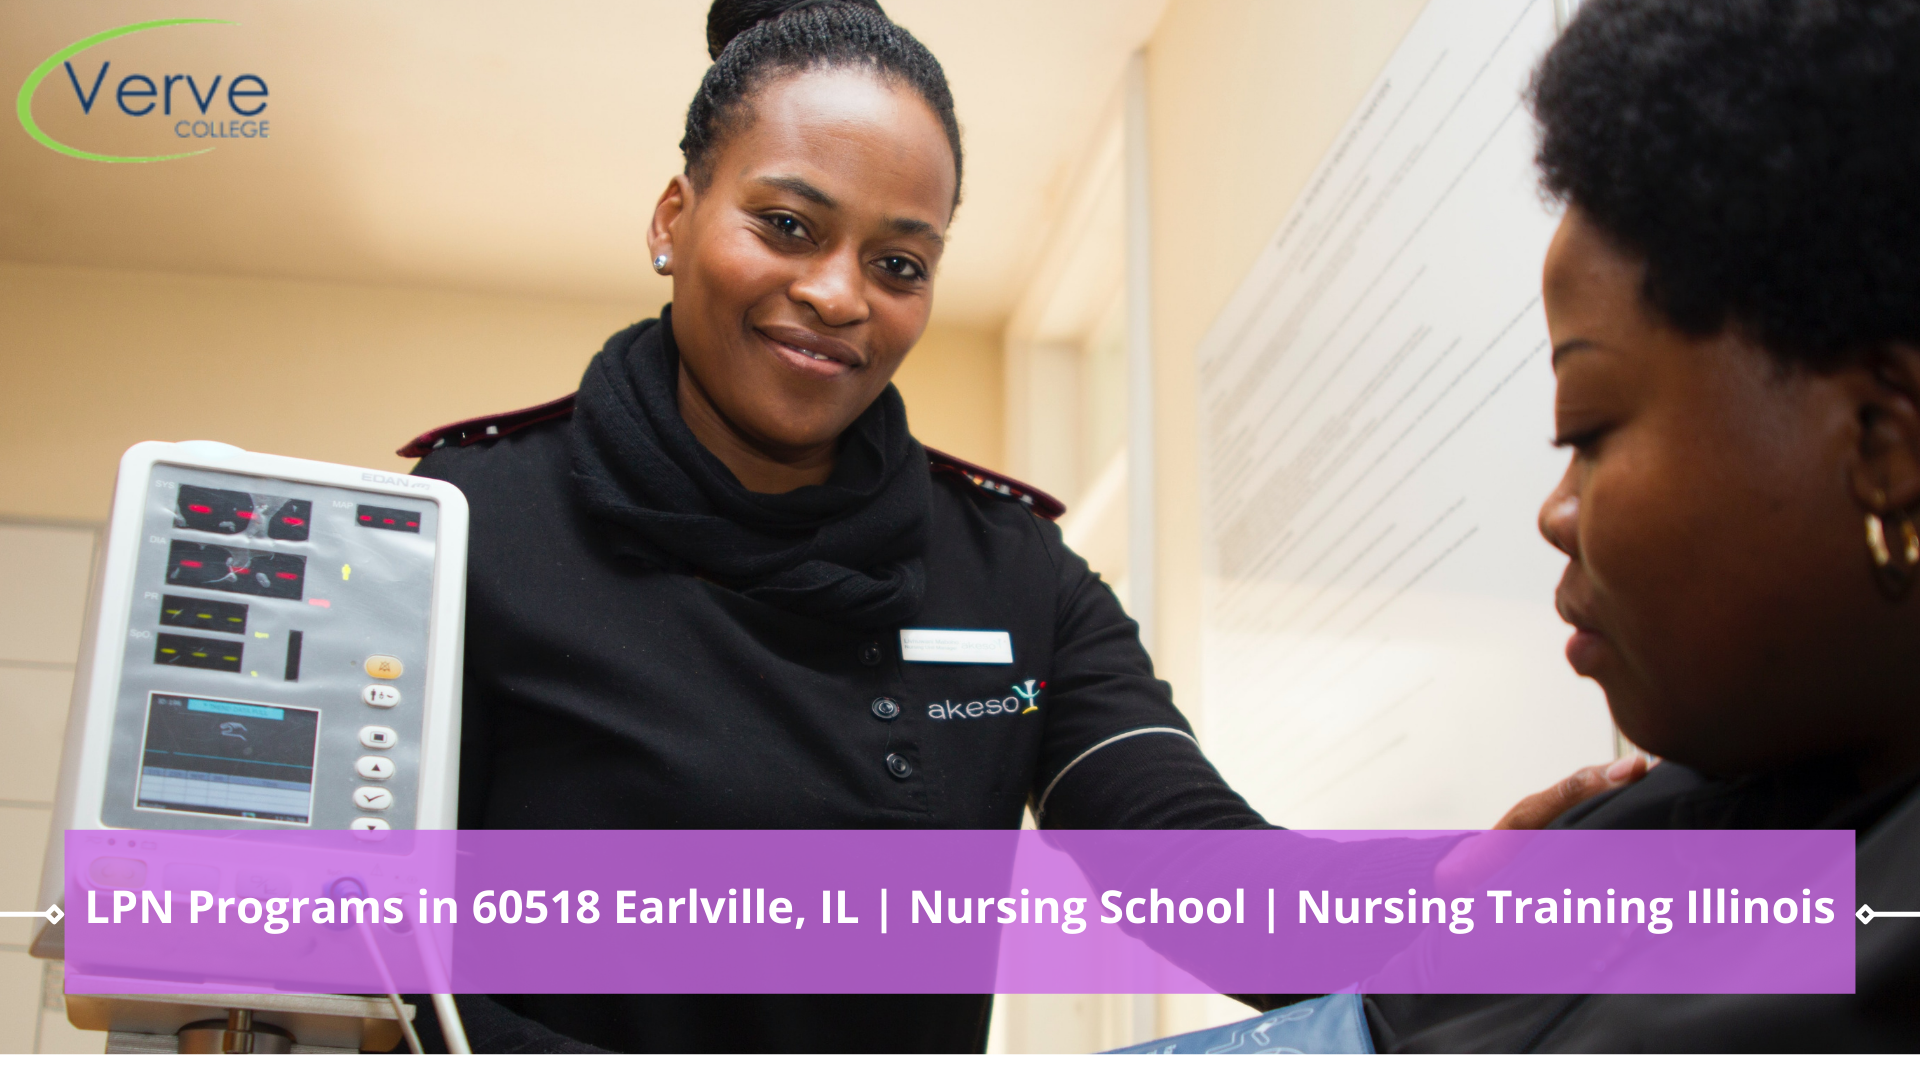 LPN Programs in 60518 Earlville, IL | Nursing School | Nursing Training Illinois